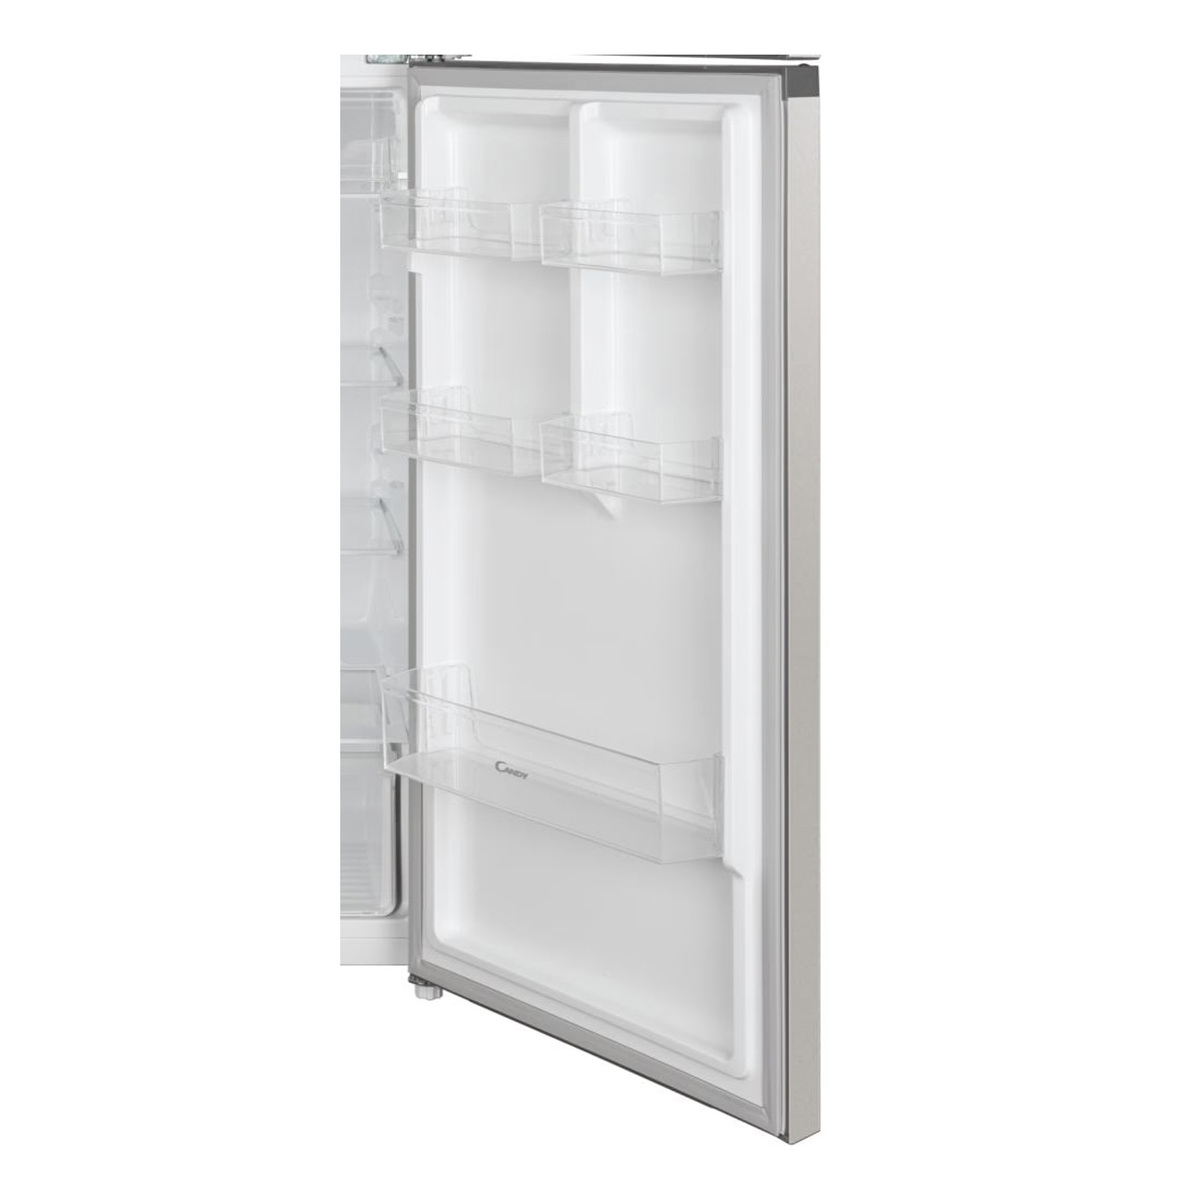 Candy Double Door Refrigerator, 470 L, Silver, CCDN-470S-19